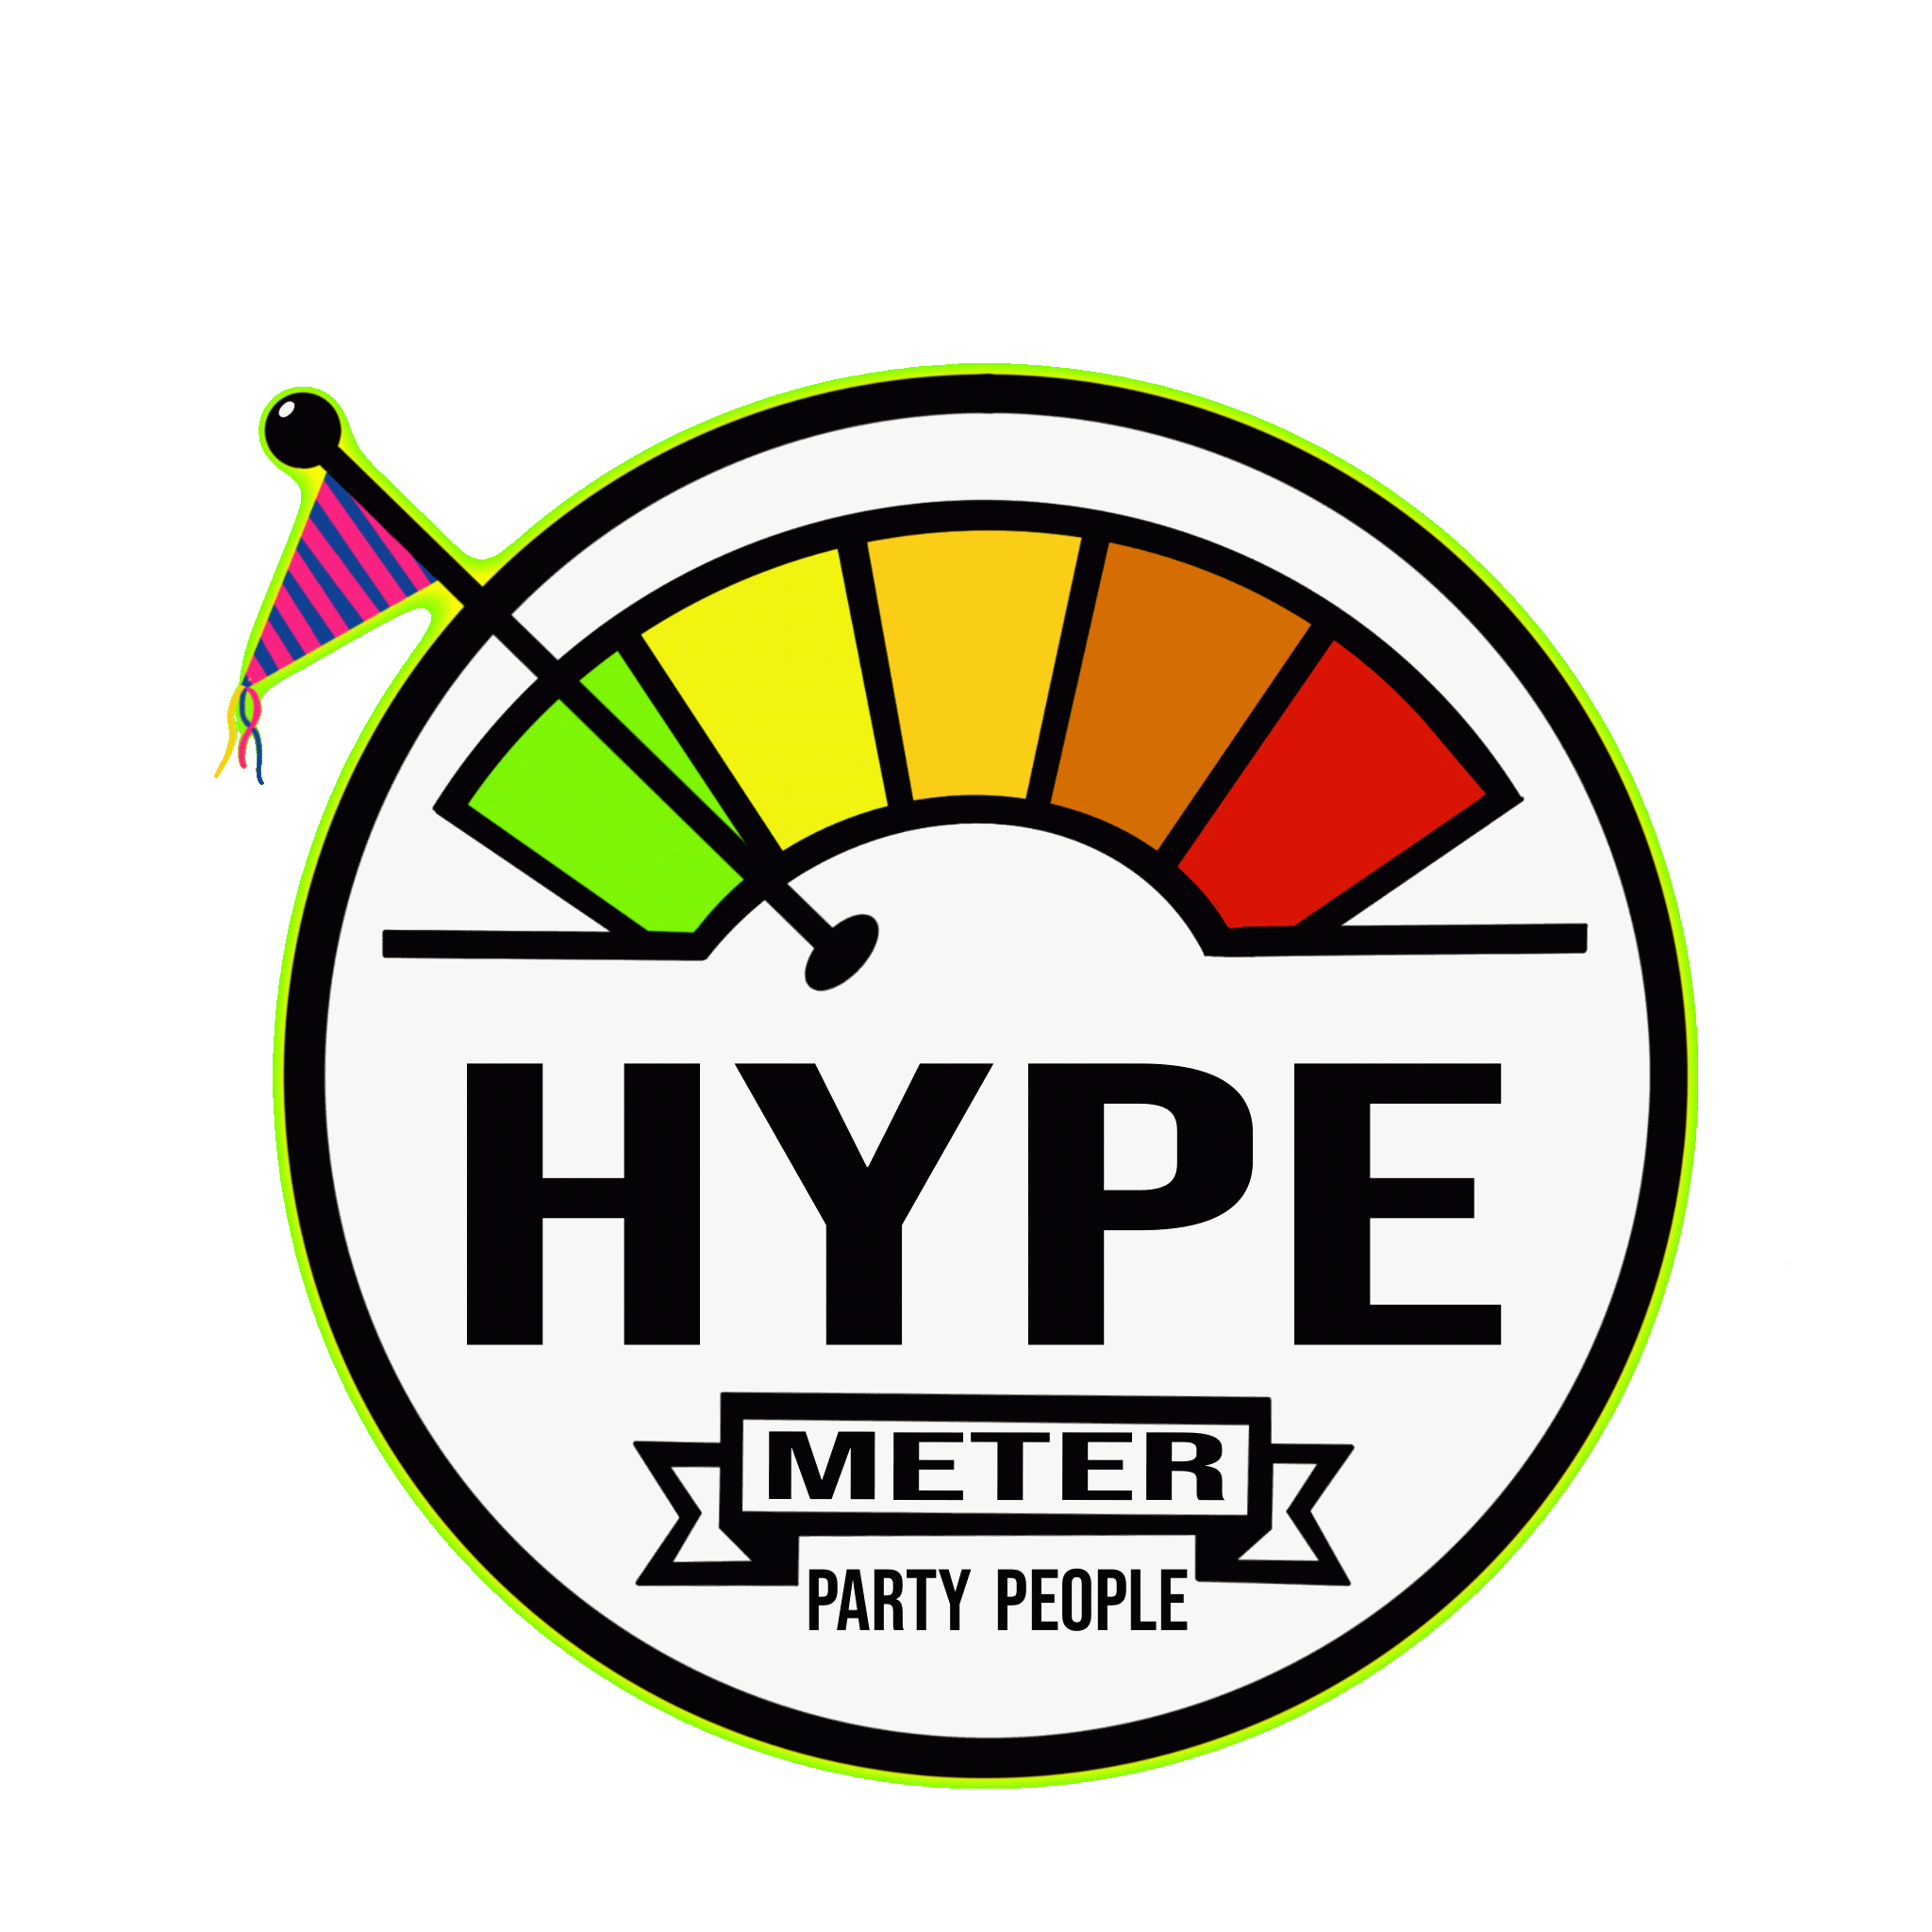 Hype meter